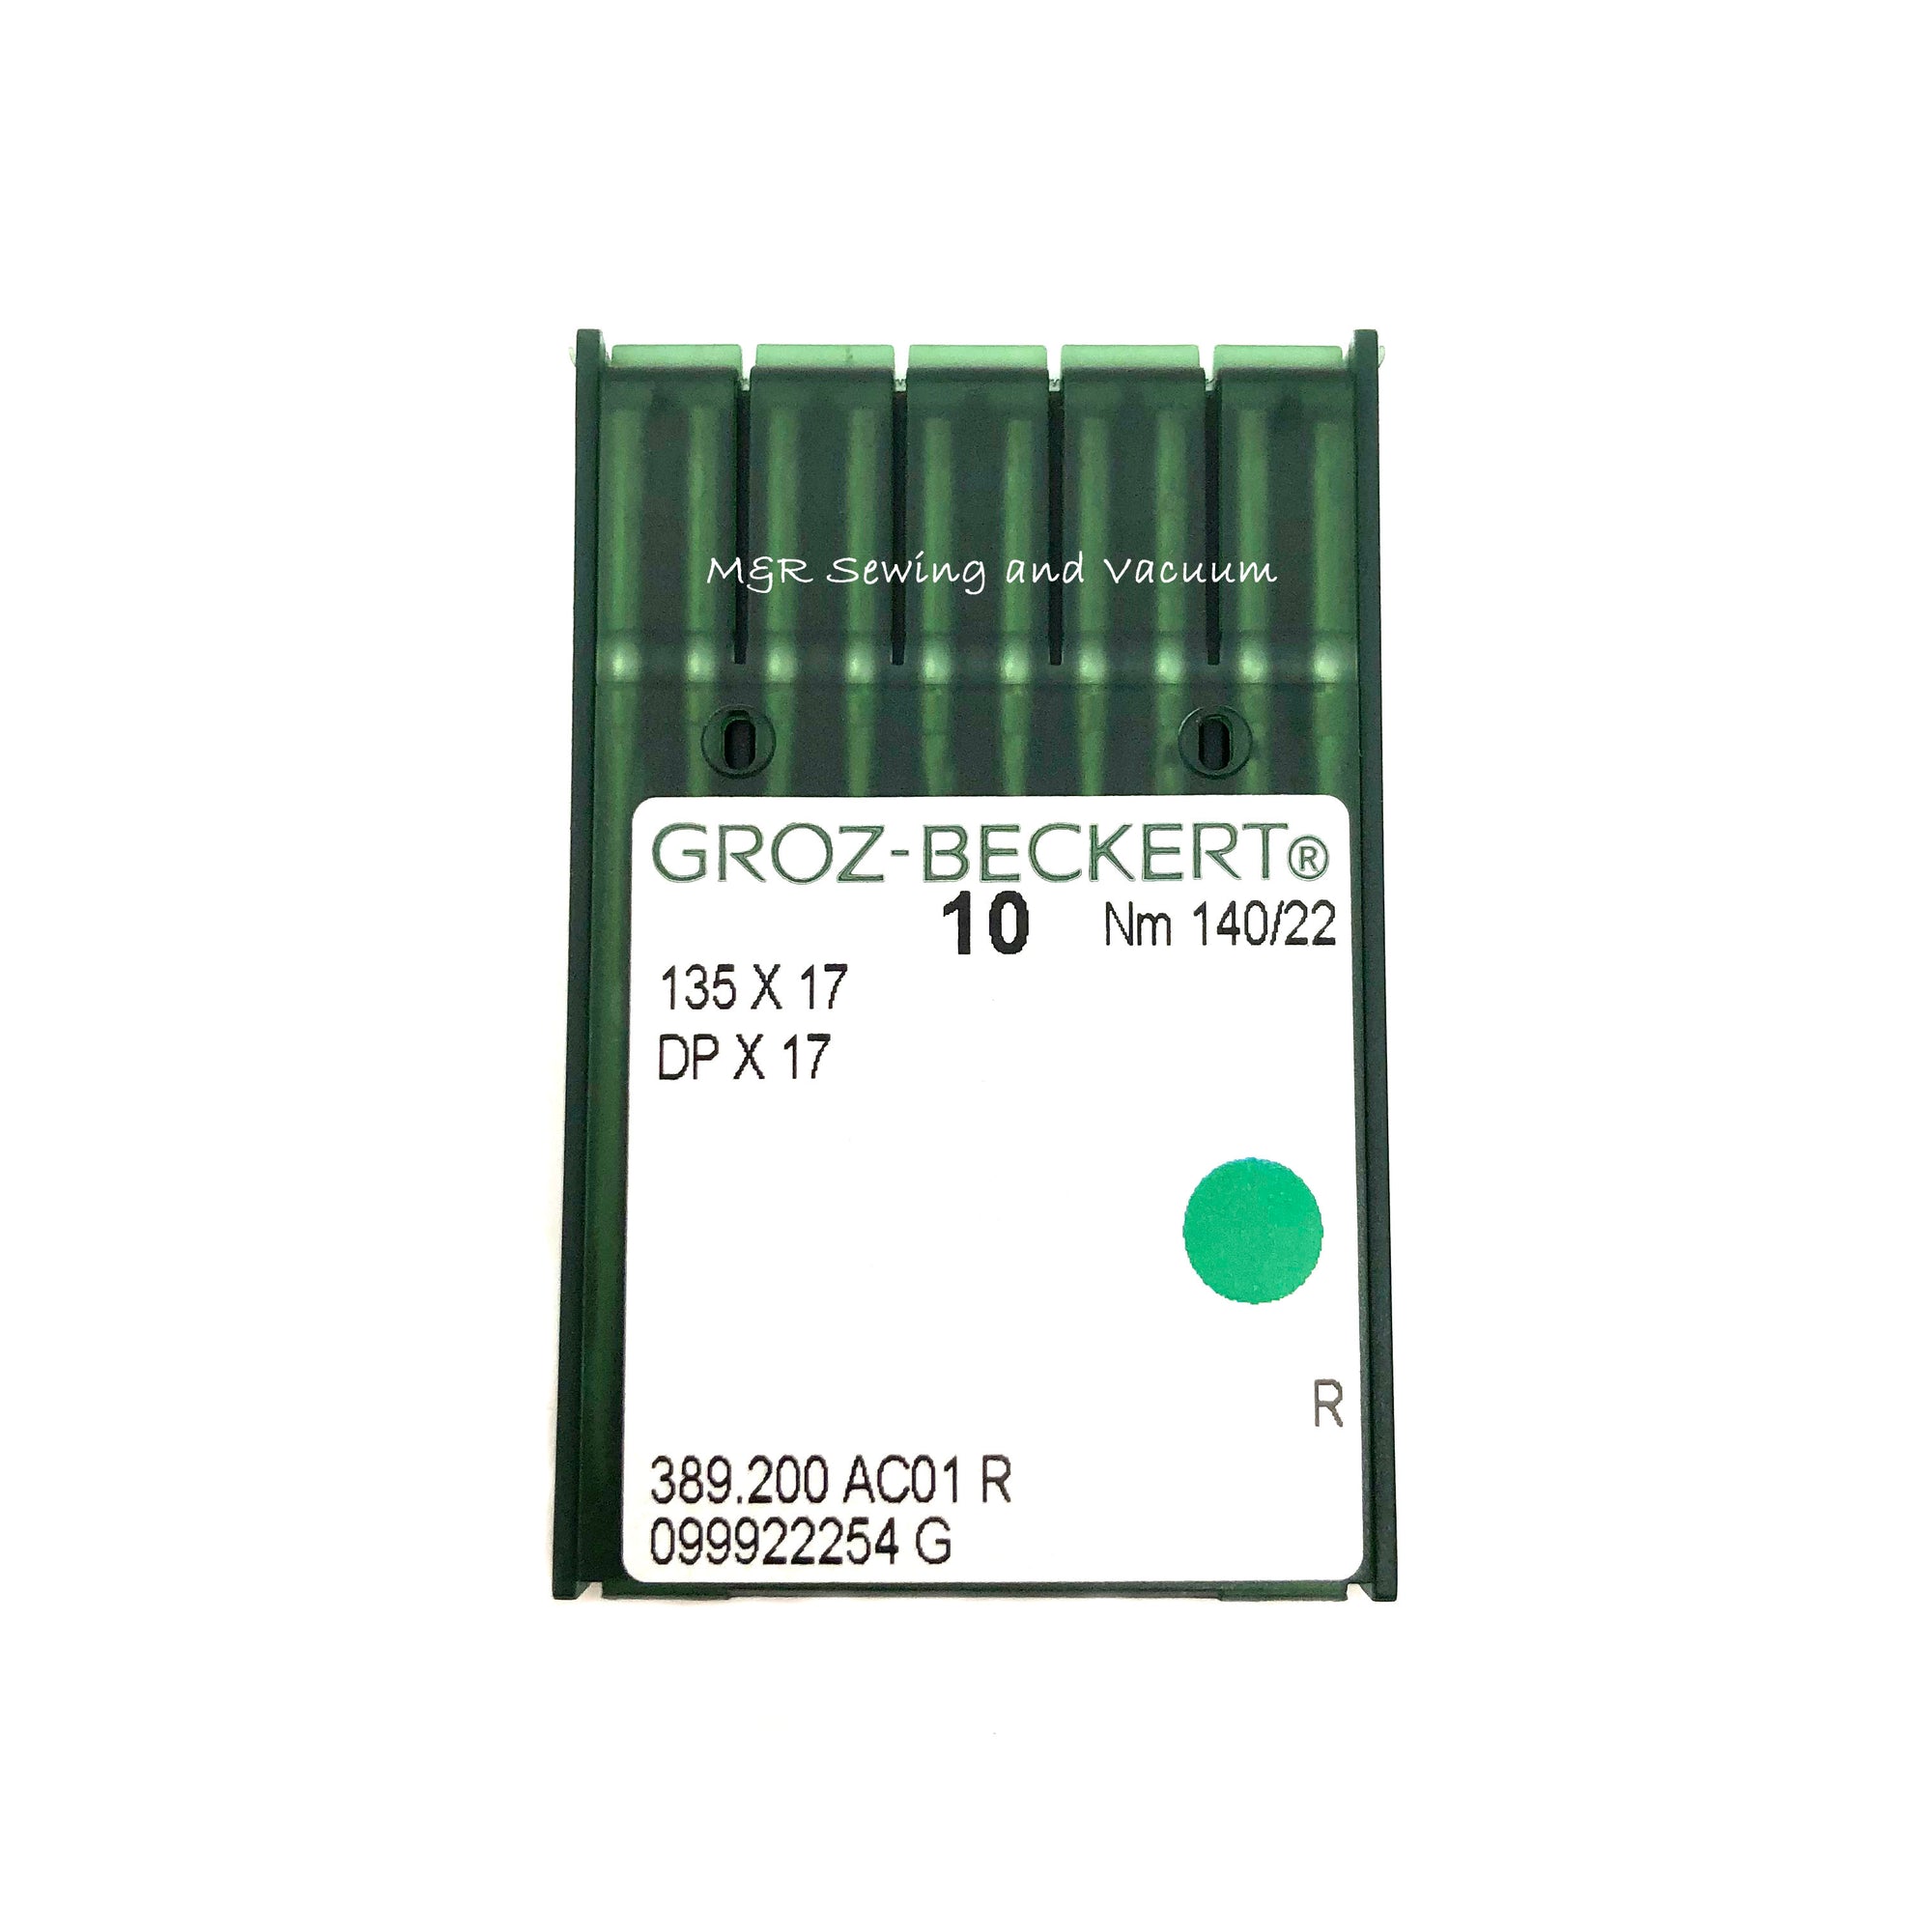 Groz-Beckert 135x17 Industrial Needles - 140/22